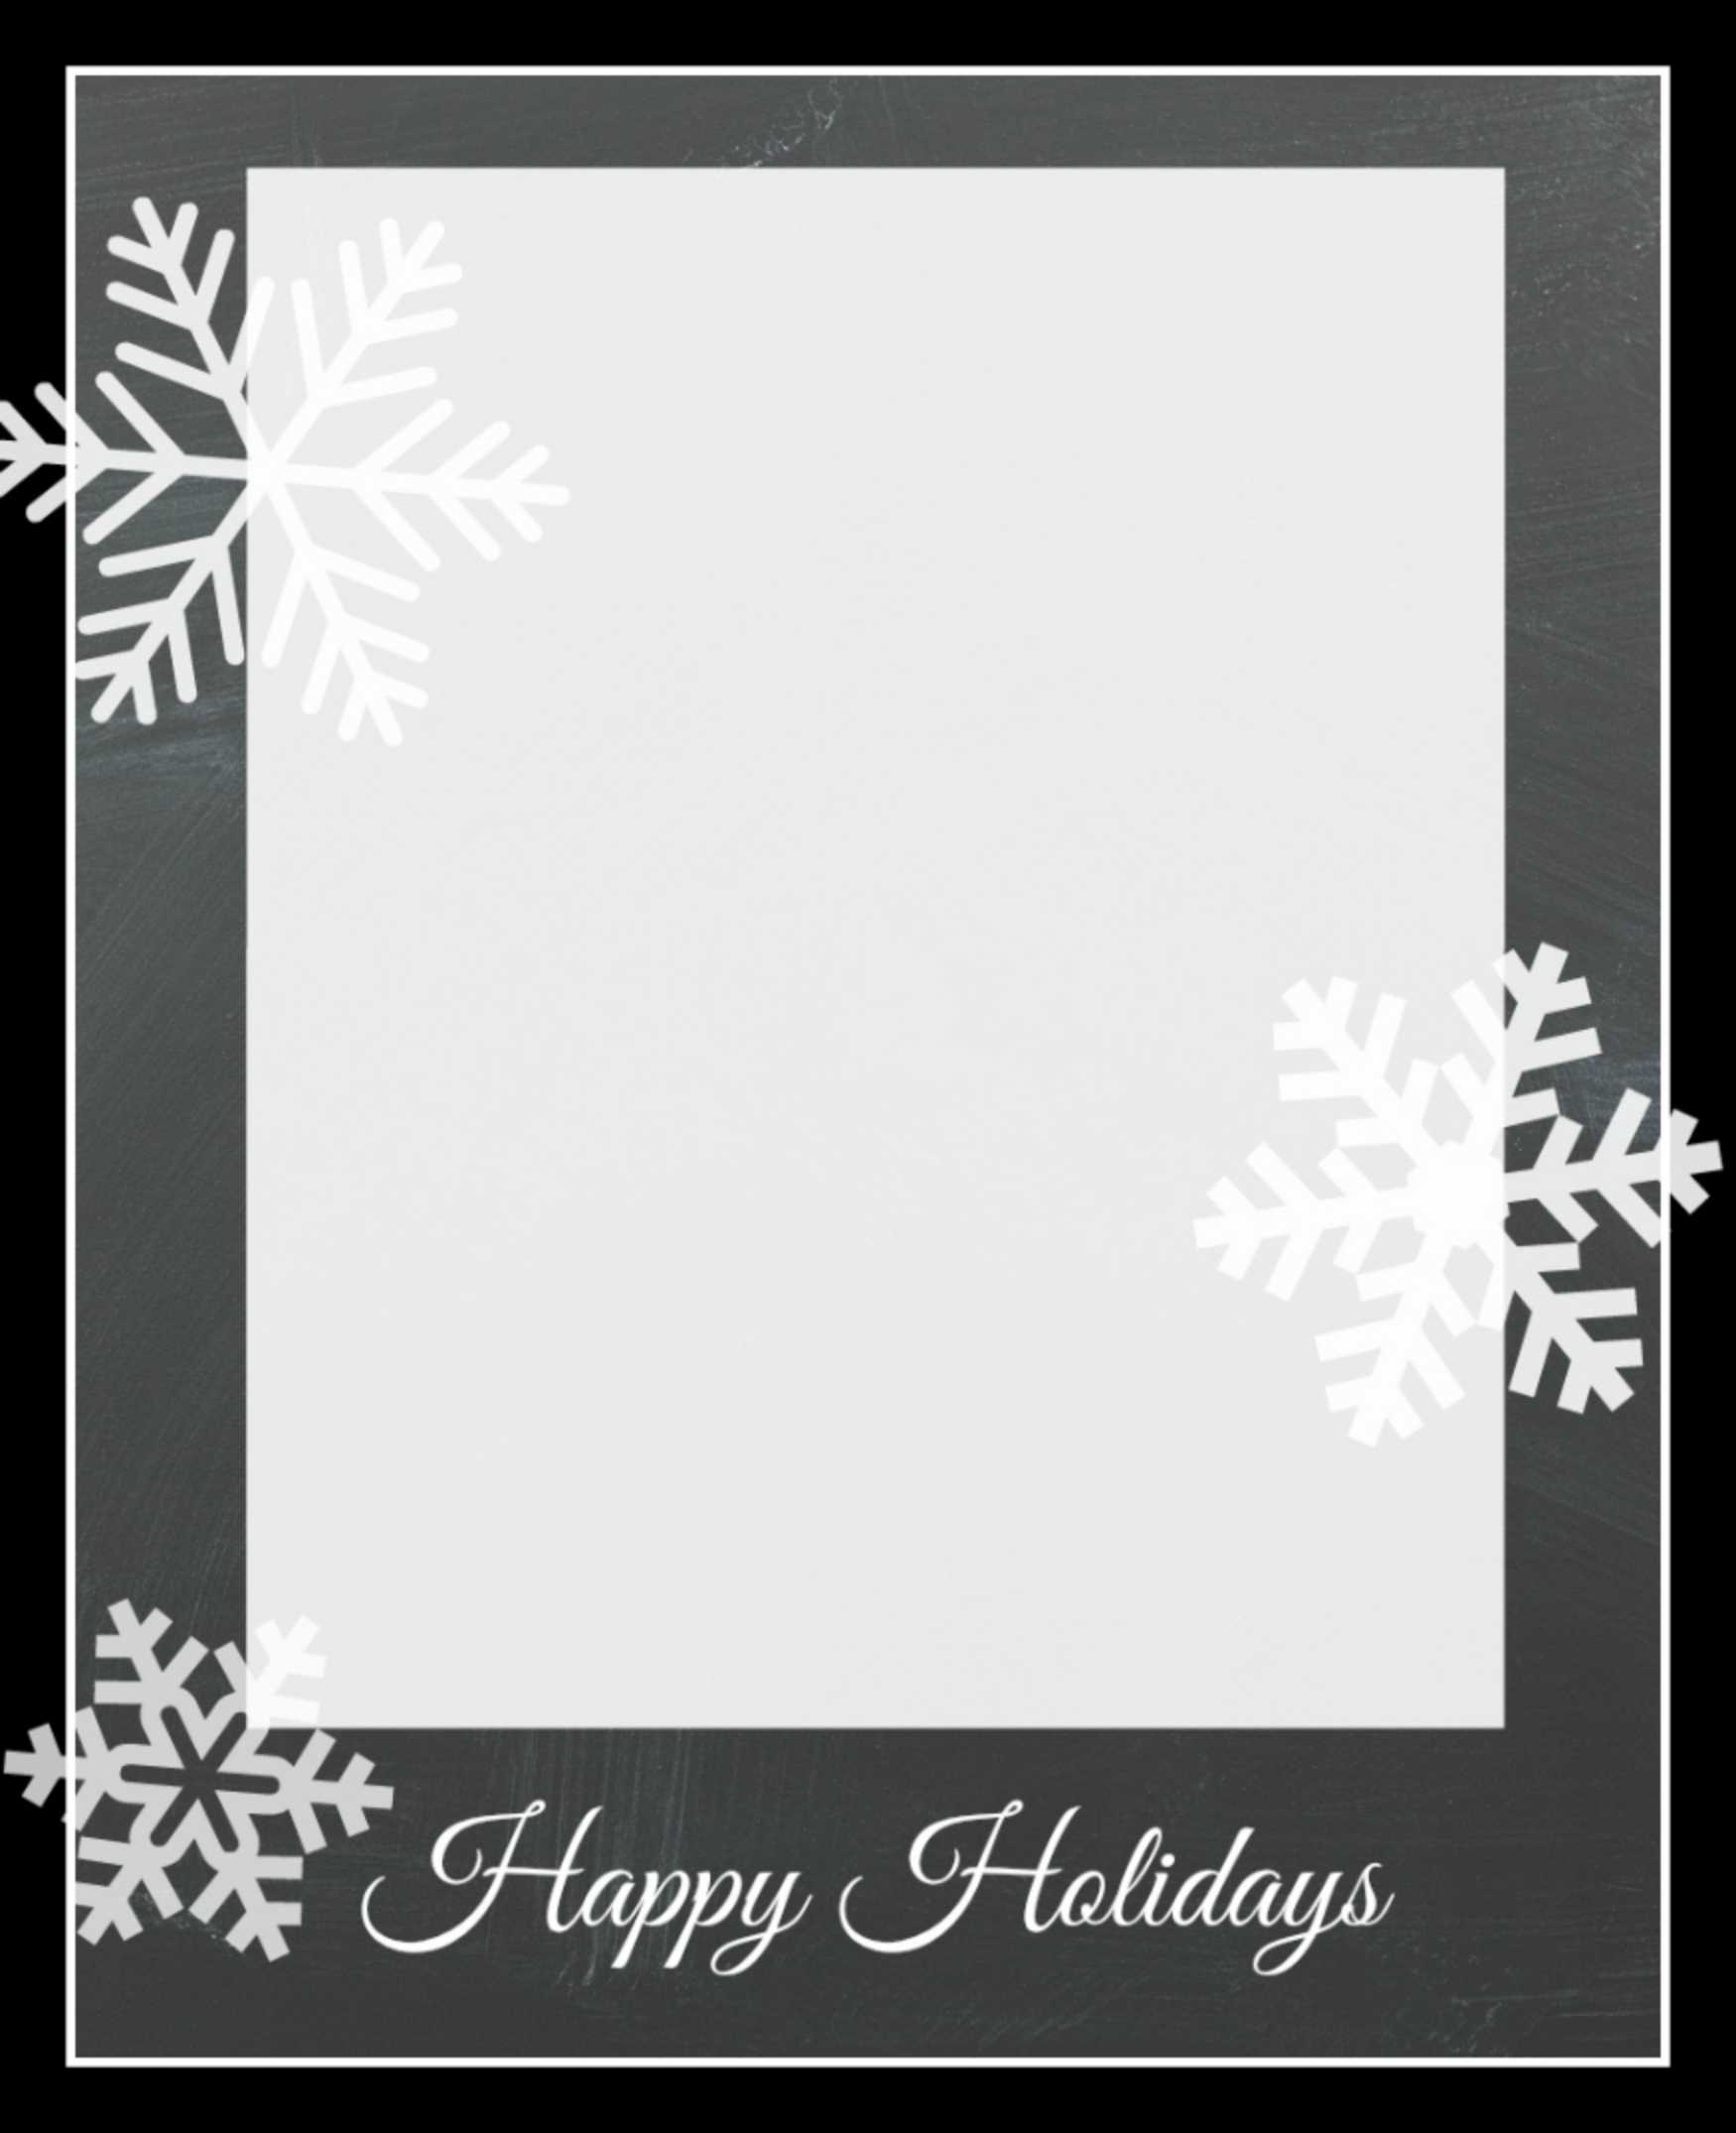 Free Christmas Photo Cards Templates – Mahre Throughout Christmas Photo Cards Templates Free Downloads